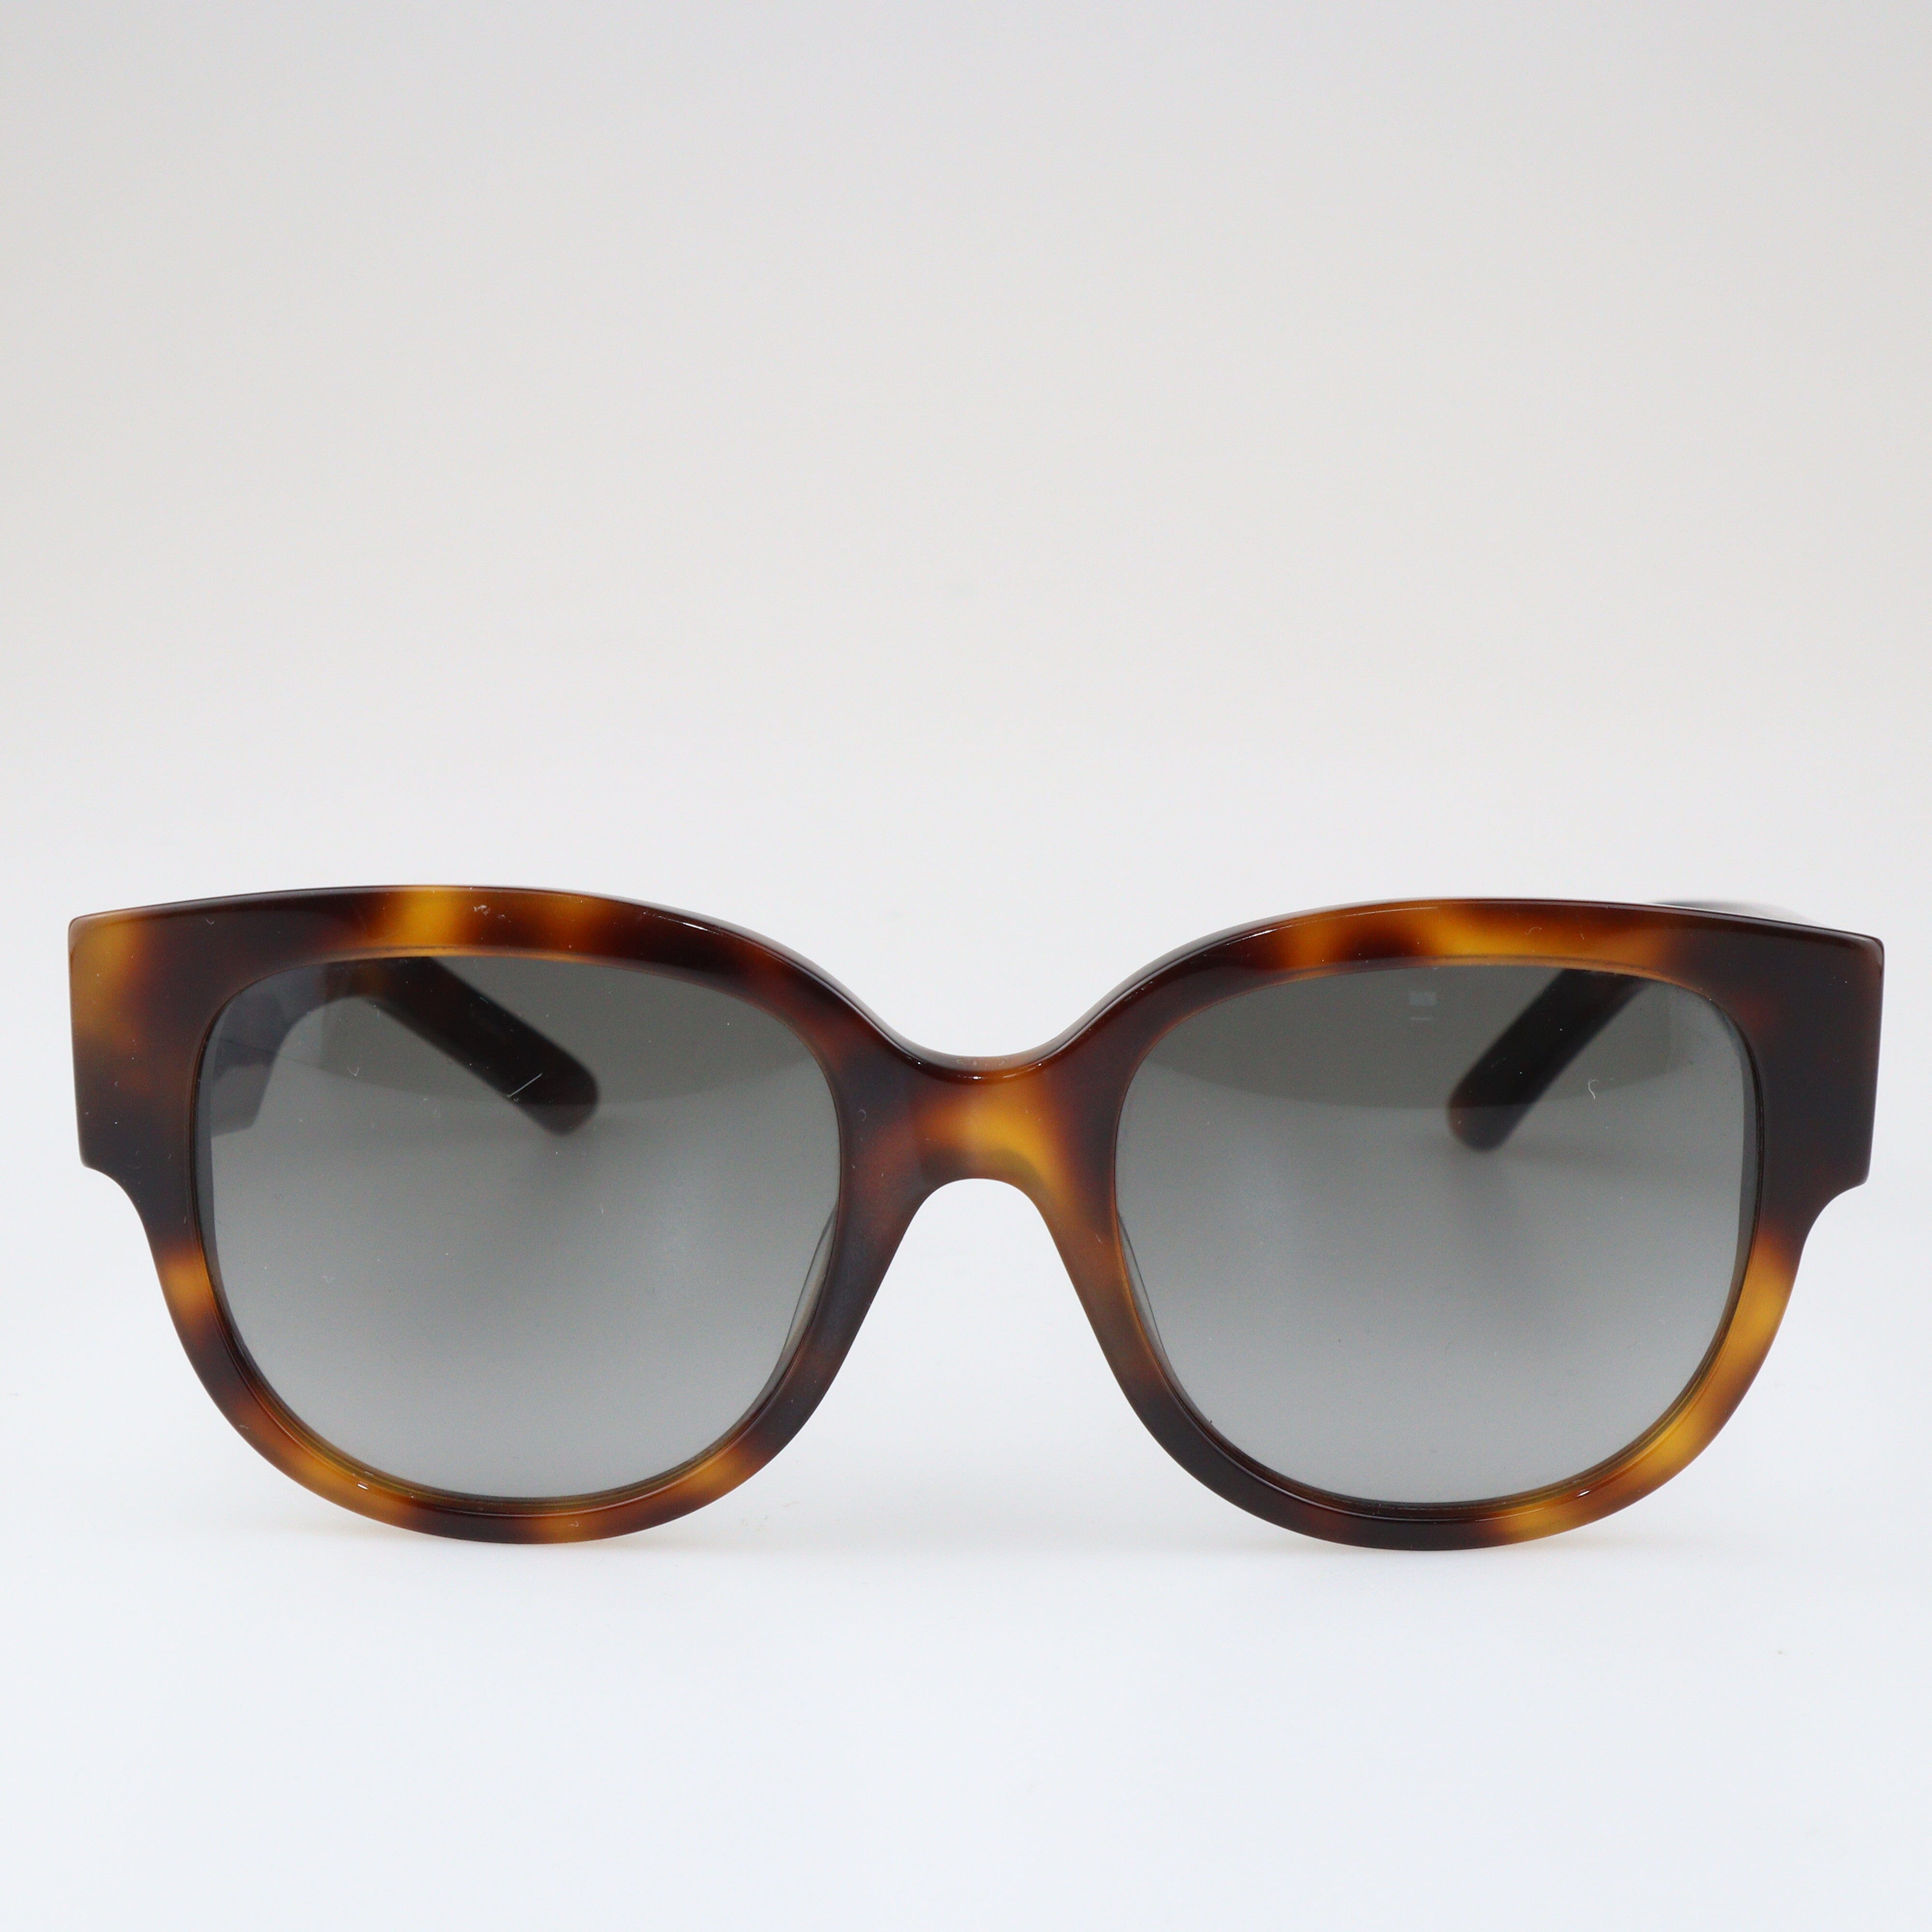 Brown Tortoiseshell Gradient Wildior BU Sunglasses Accessories Dior 